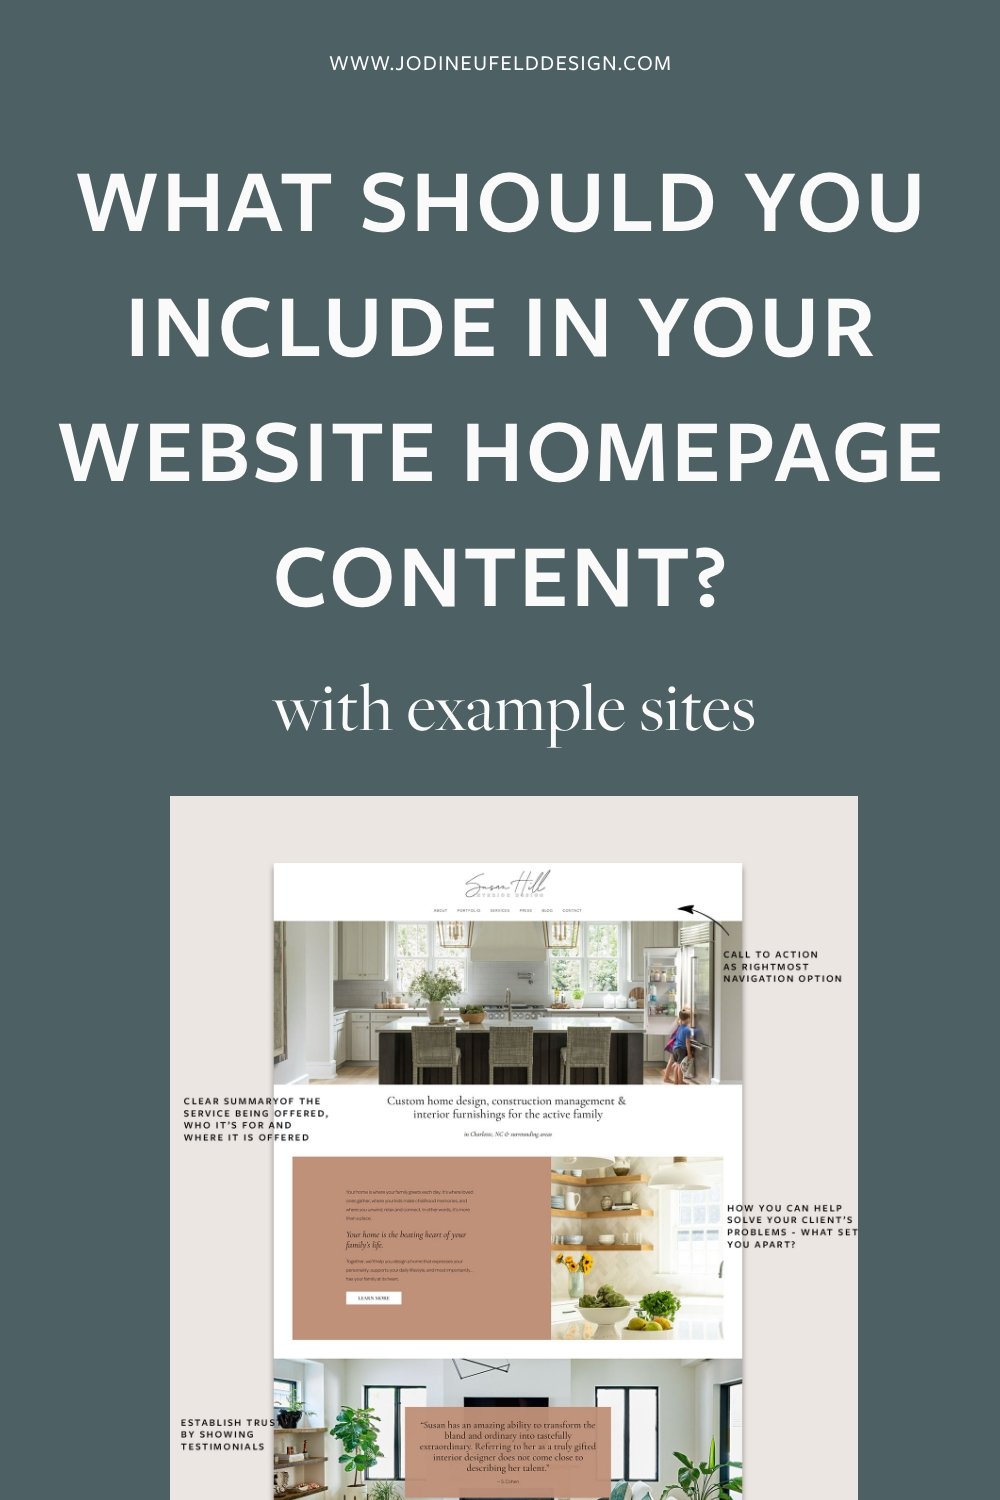 website homepage content ideas | Jodi Neufeld Design